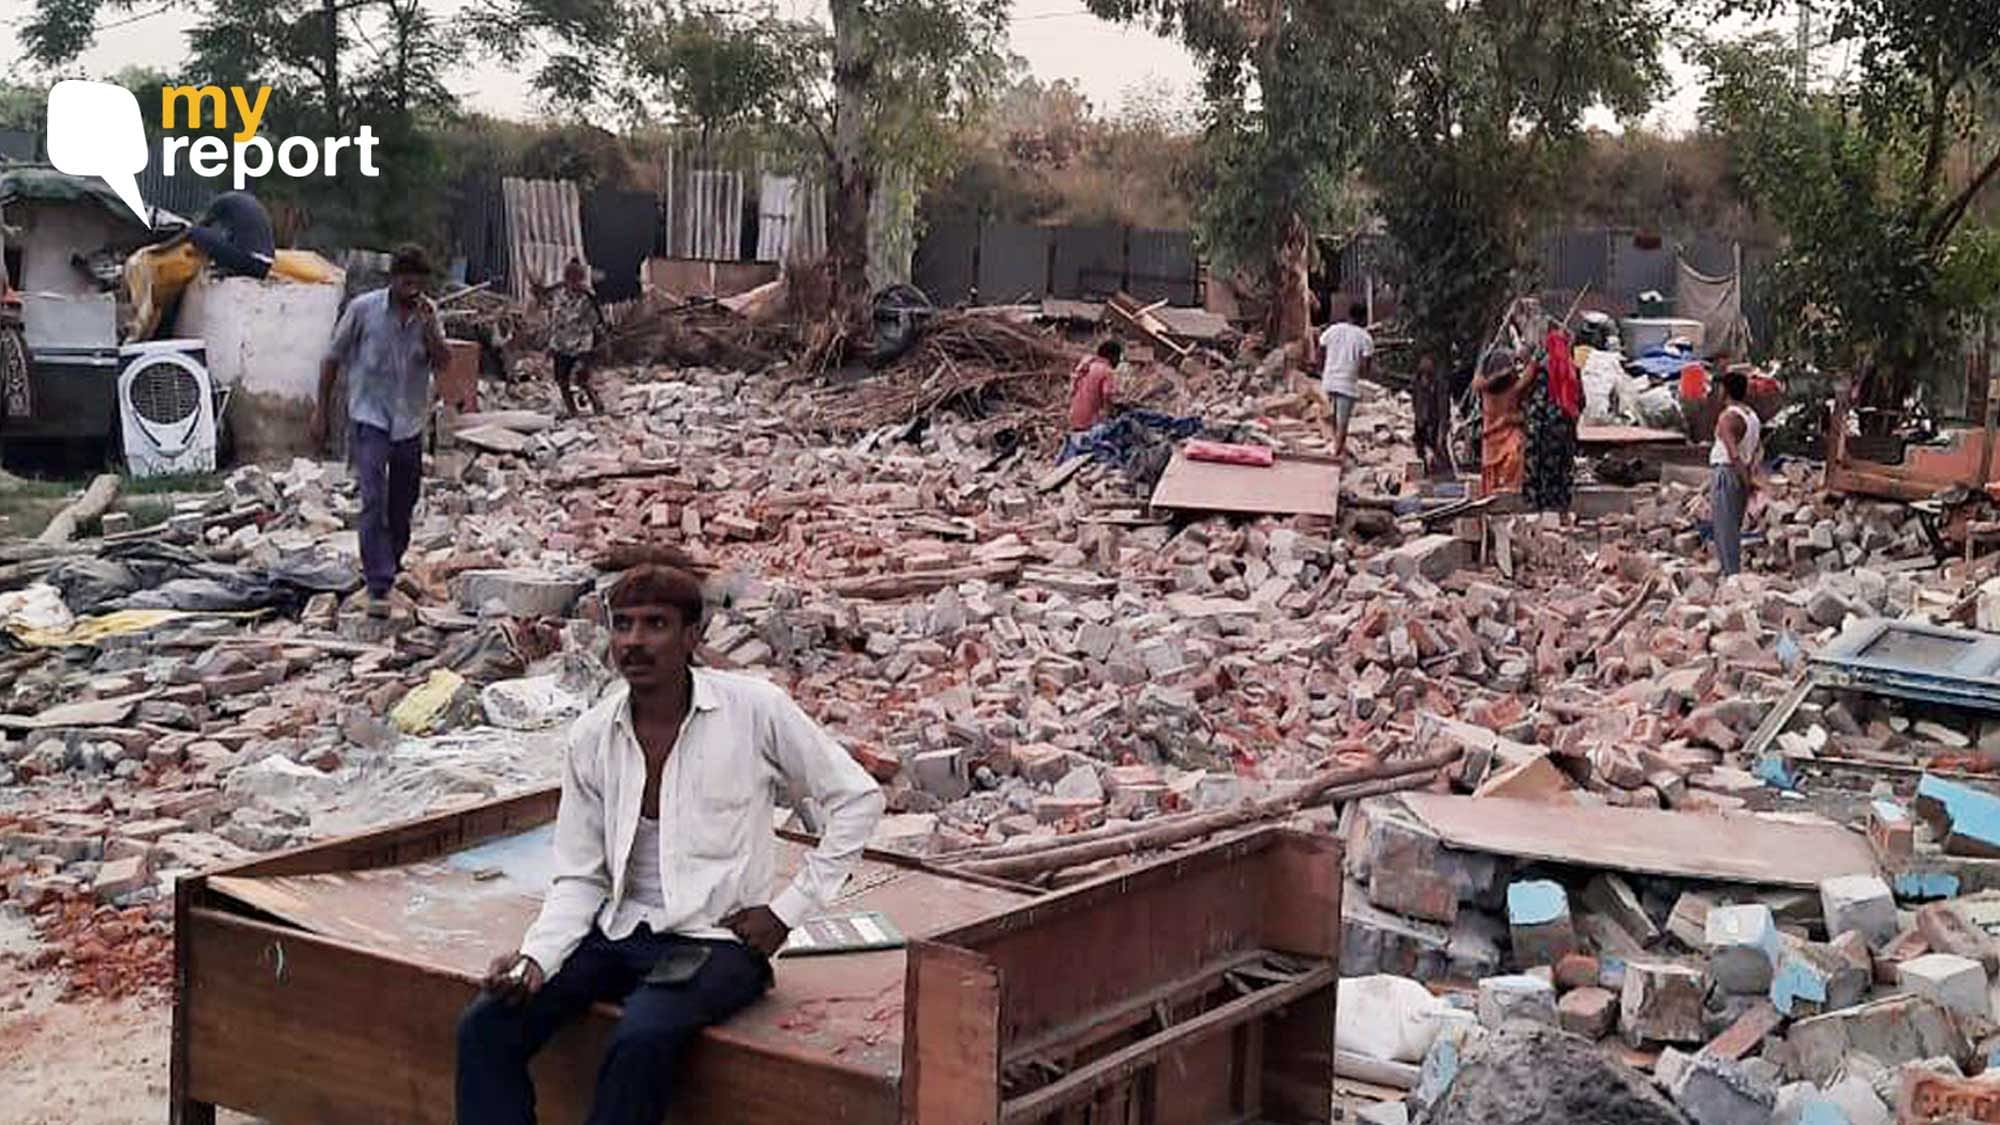 <div class="paragraphs"><p>On 27 June, DDA demolished around 30 illegal shanties at Delhi's Sarai Kale Khan.</p></div>